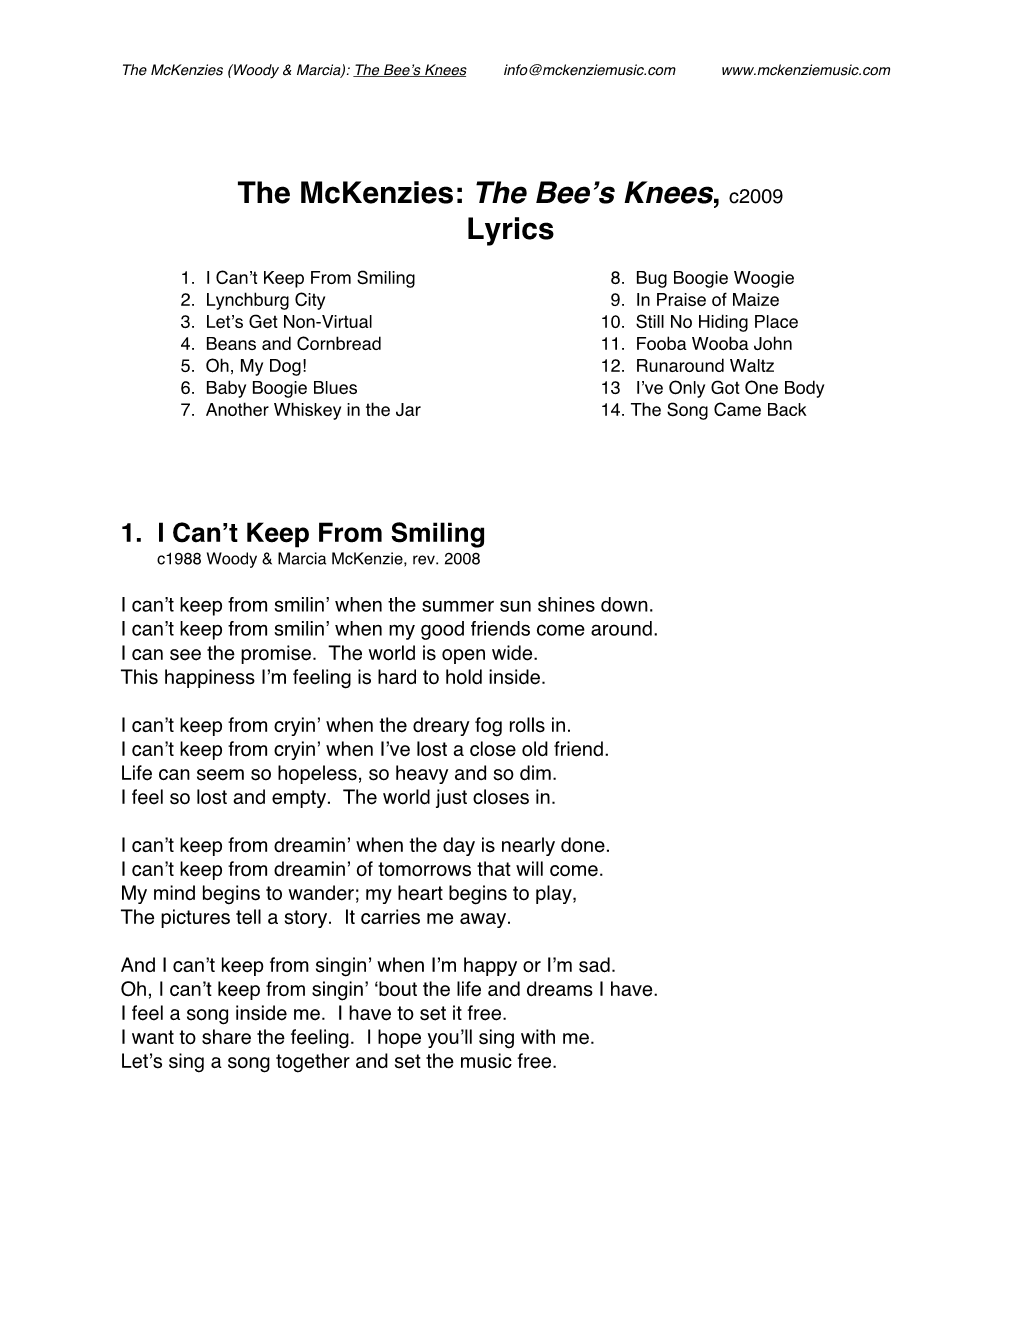 The Bee's Knees, C2009 Lyrics